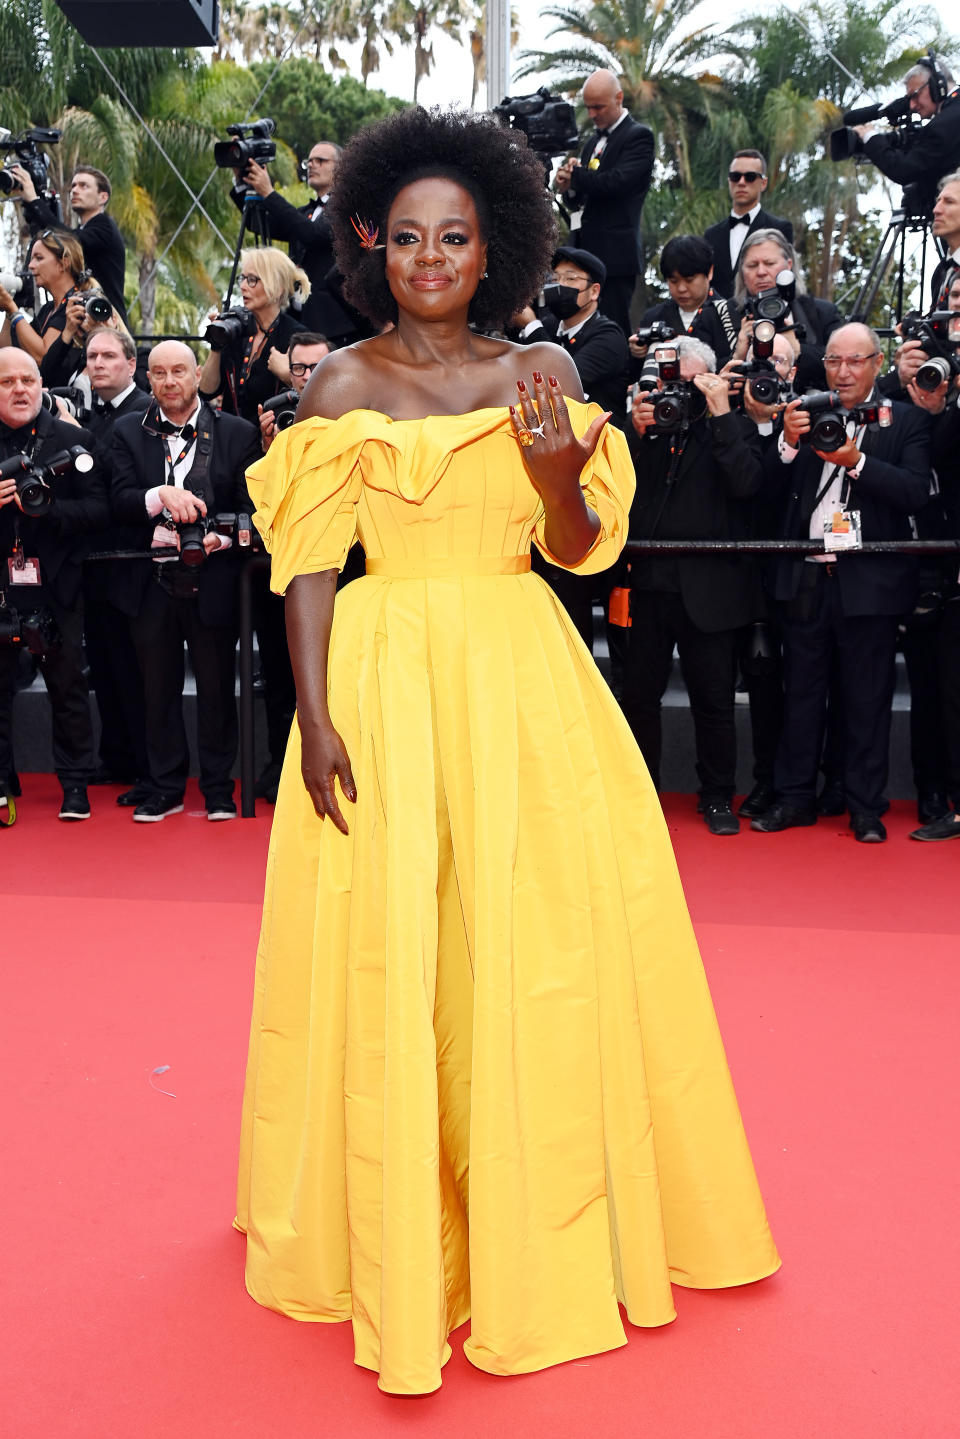 Top Gun Cannes Film Festival premiere red carpet Viola Davis